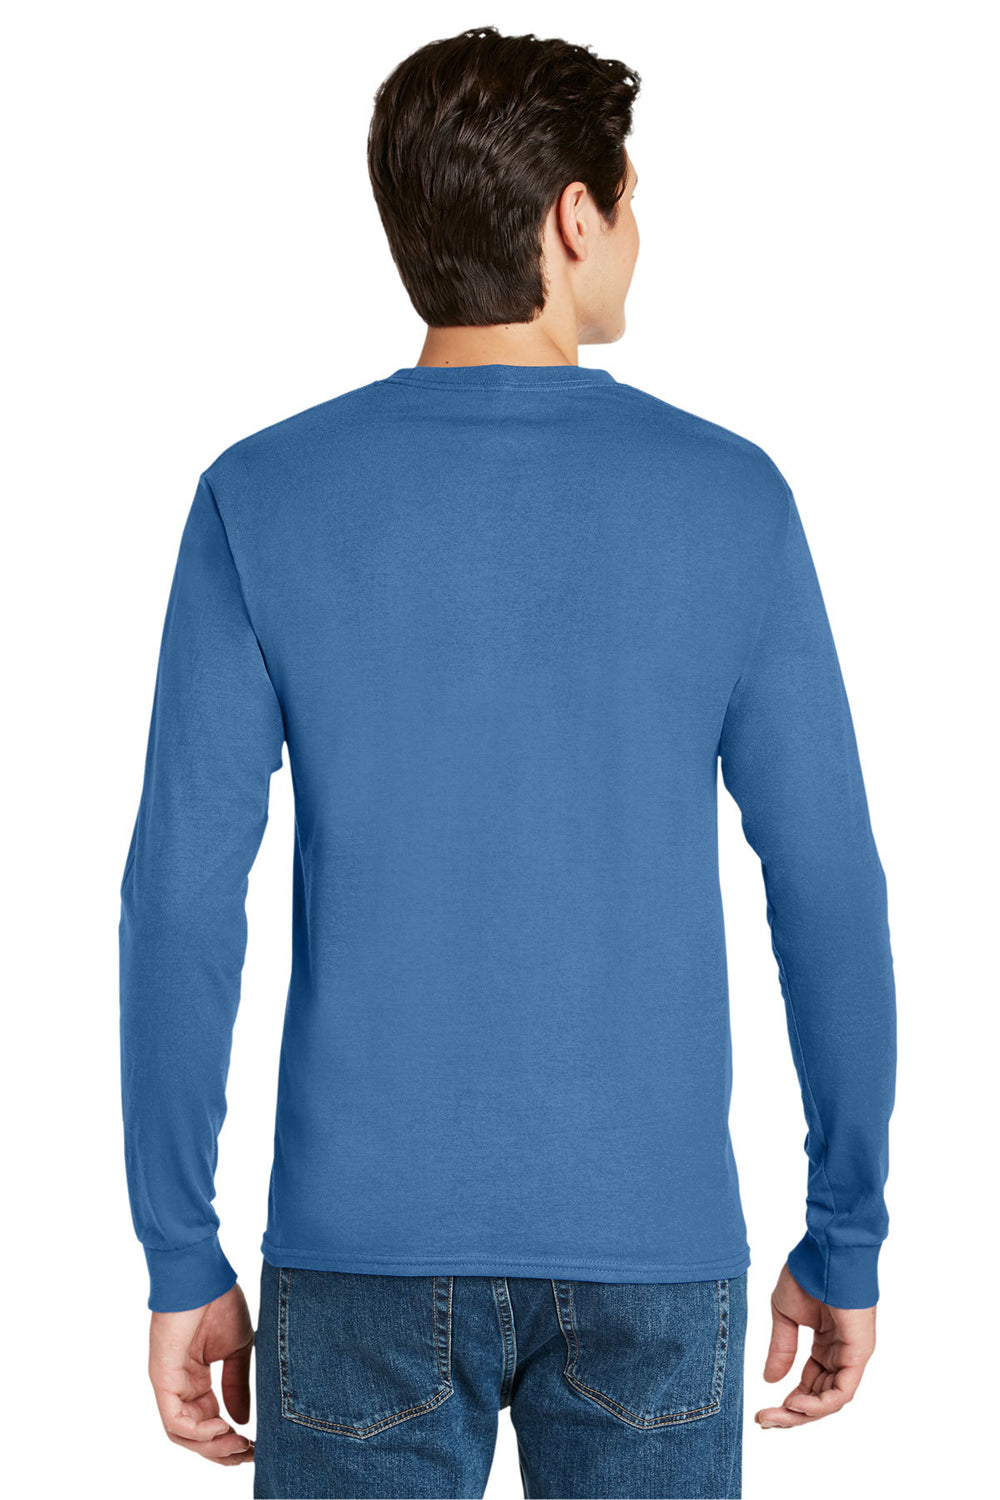 Hanes 5586 Mens ComfortSoft Long Sleeve Crewneck T-Shirt Carolina Blue Back